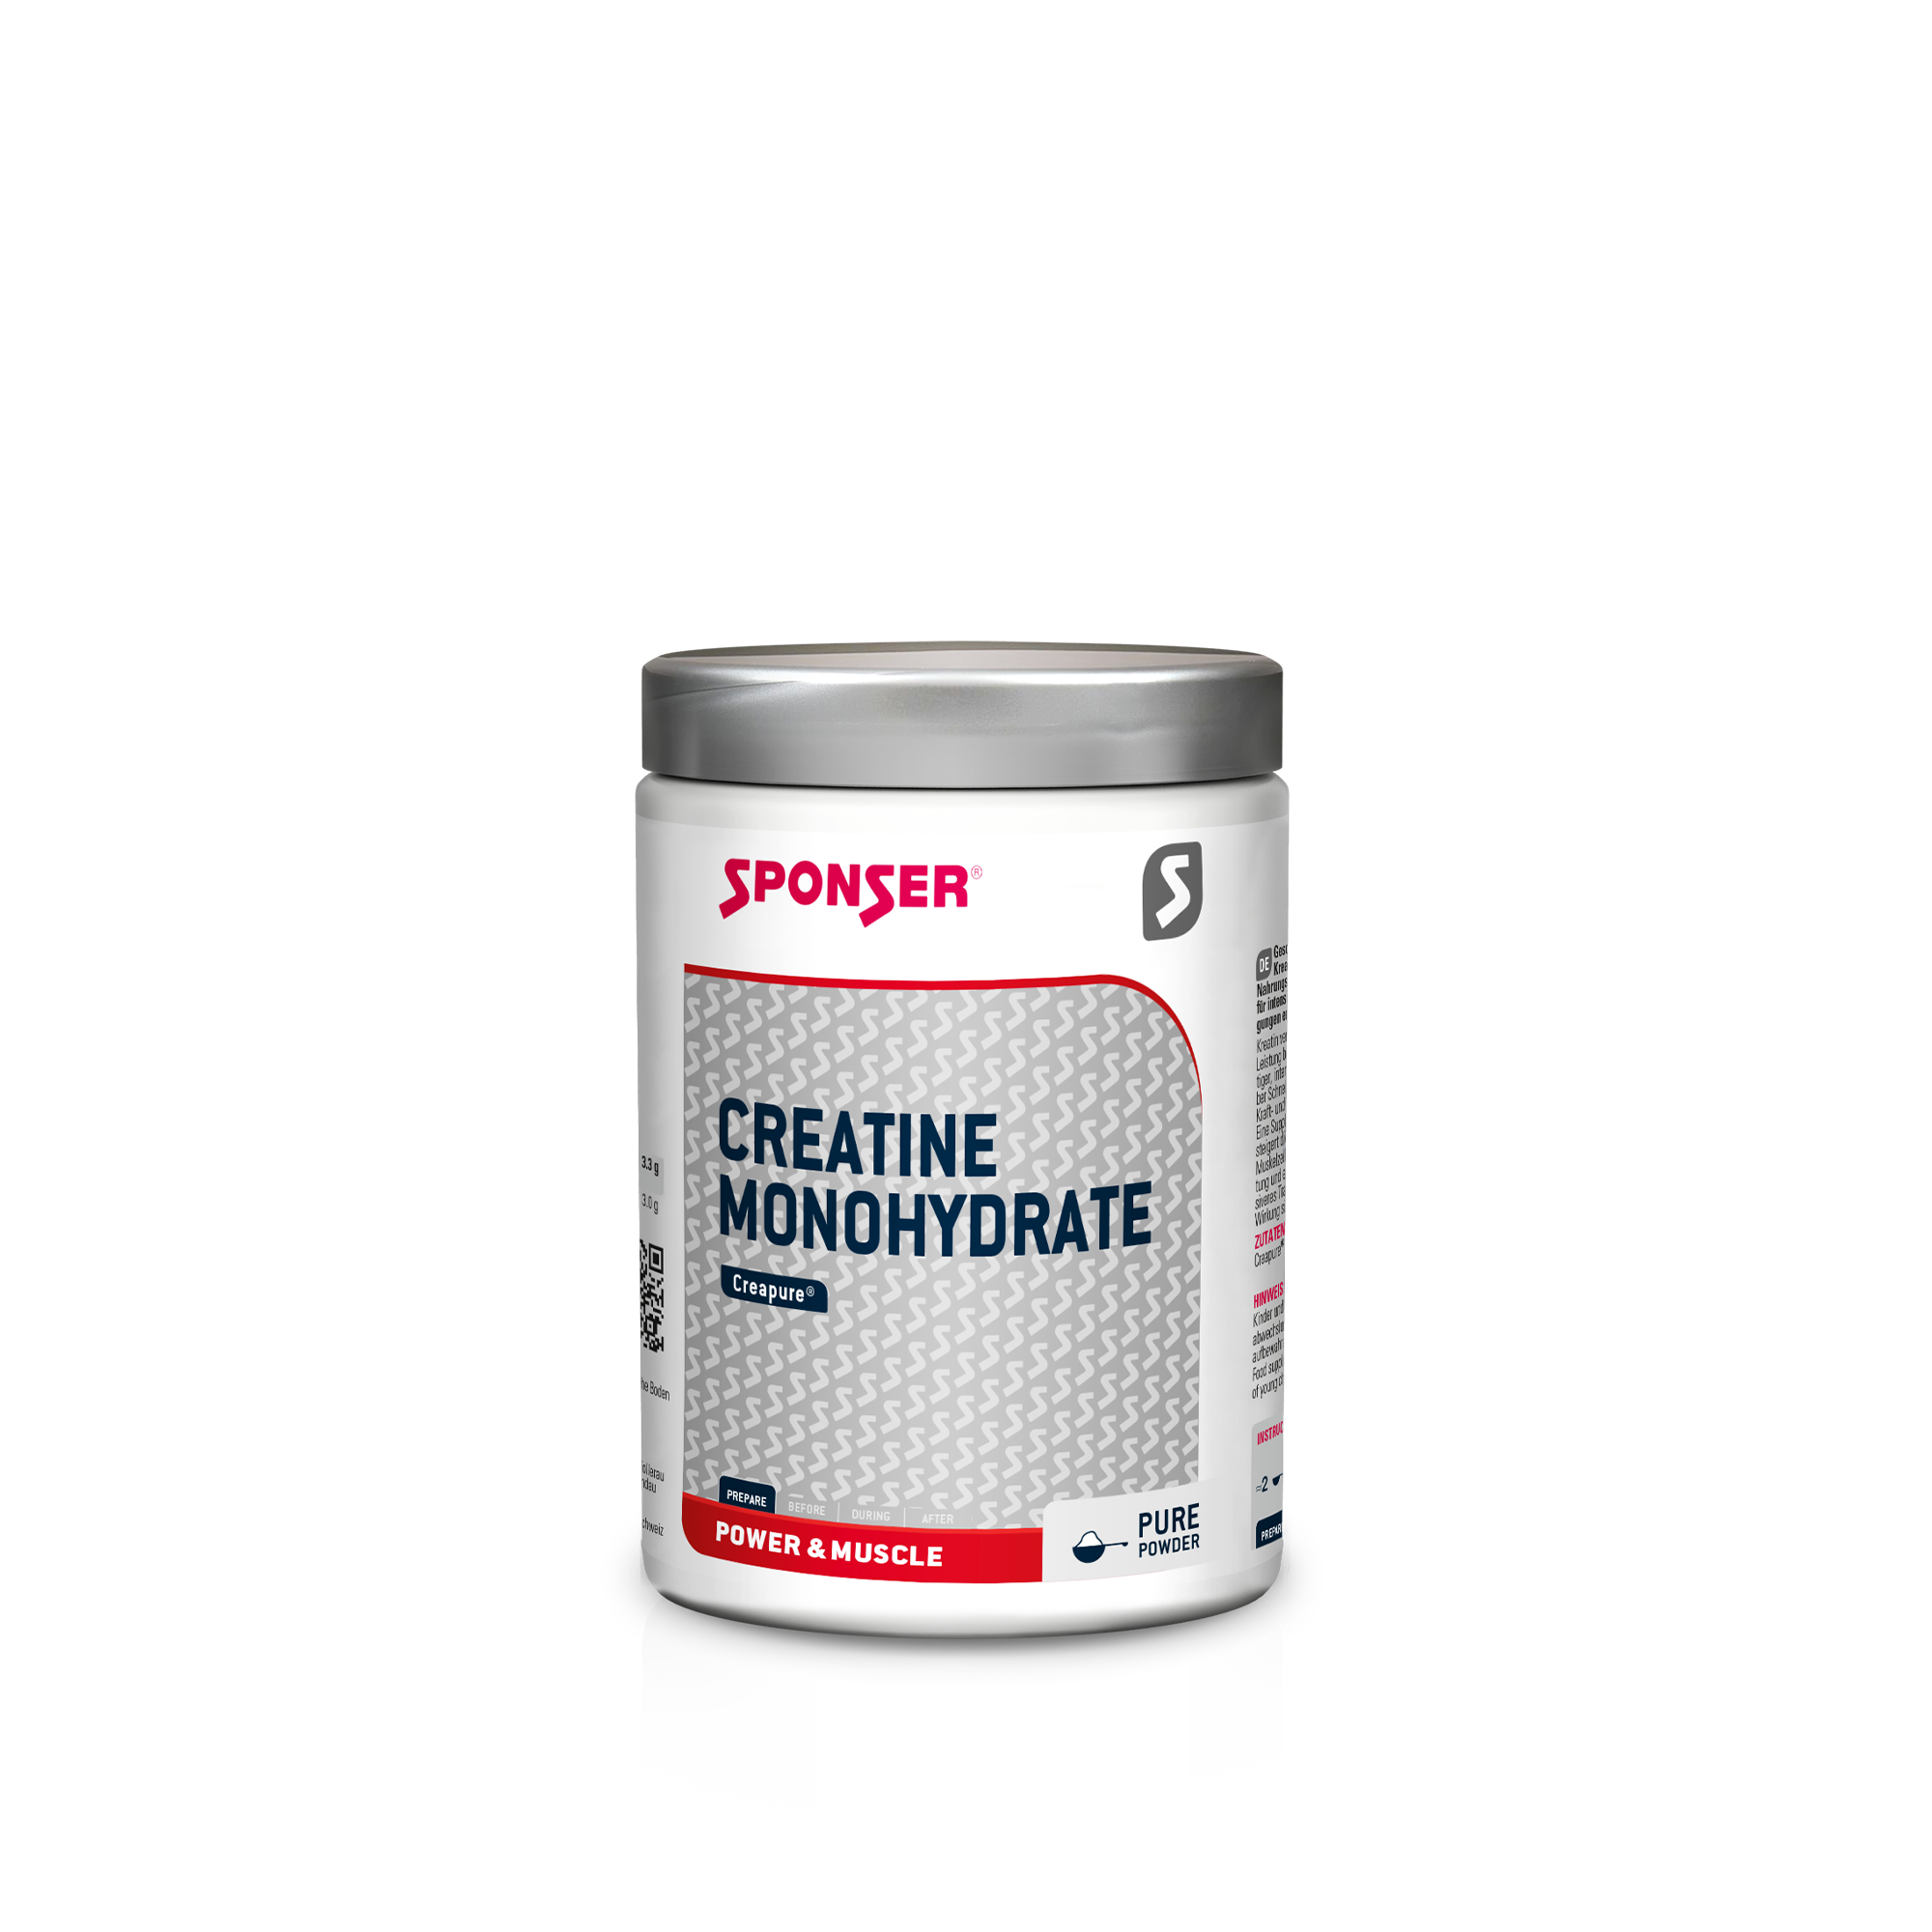 Sponser Creatine Monohydrate, 500 g.